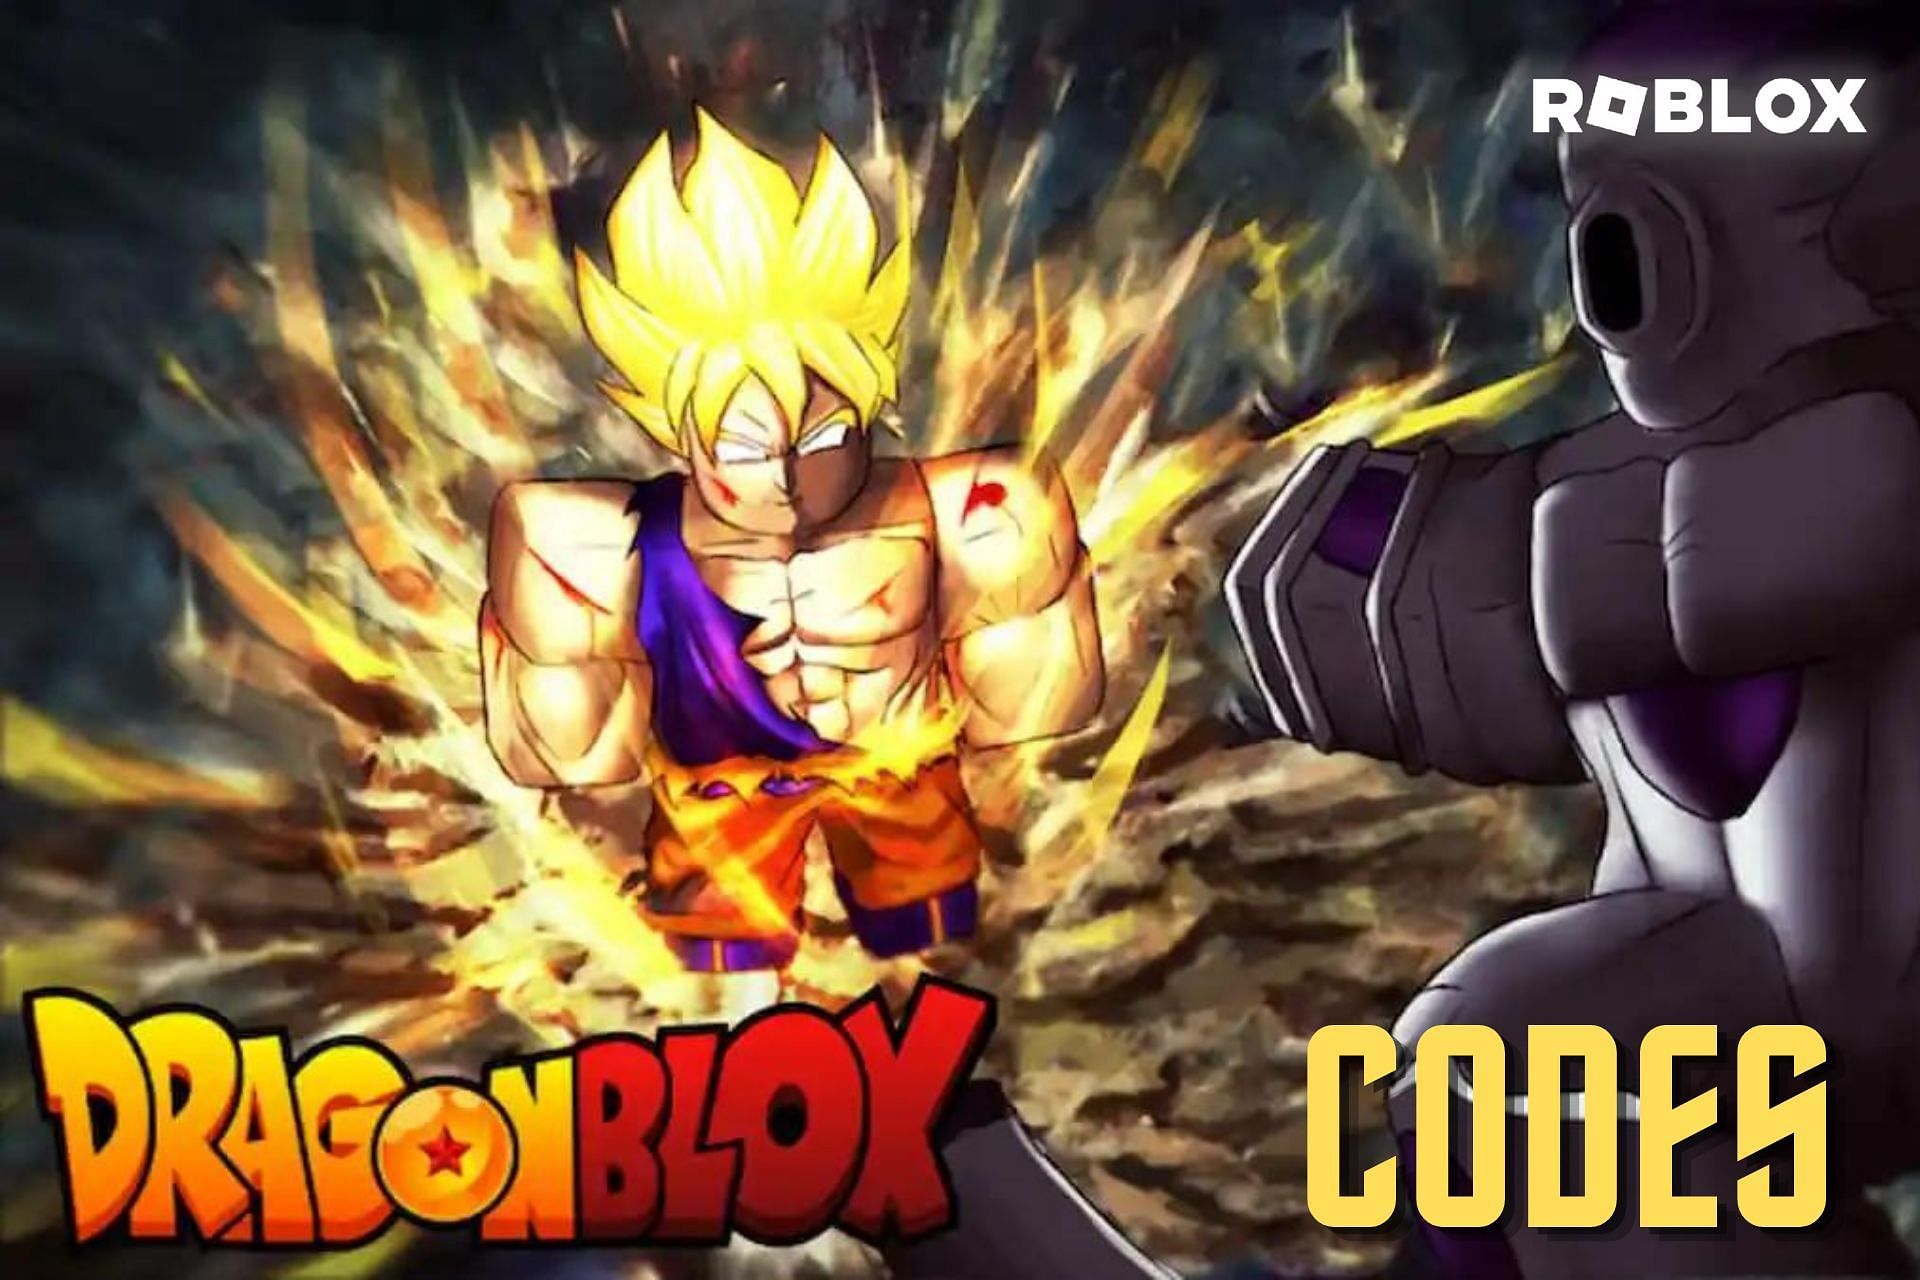 Dragon Ball Final Remastered Codes – Roblox – December 2023 